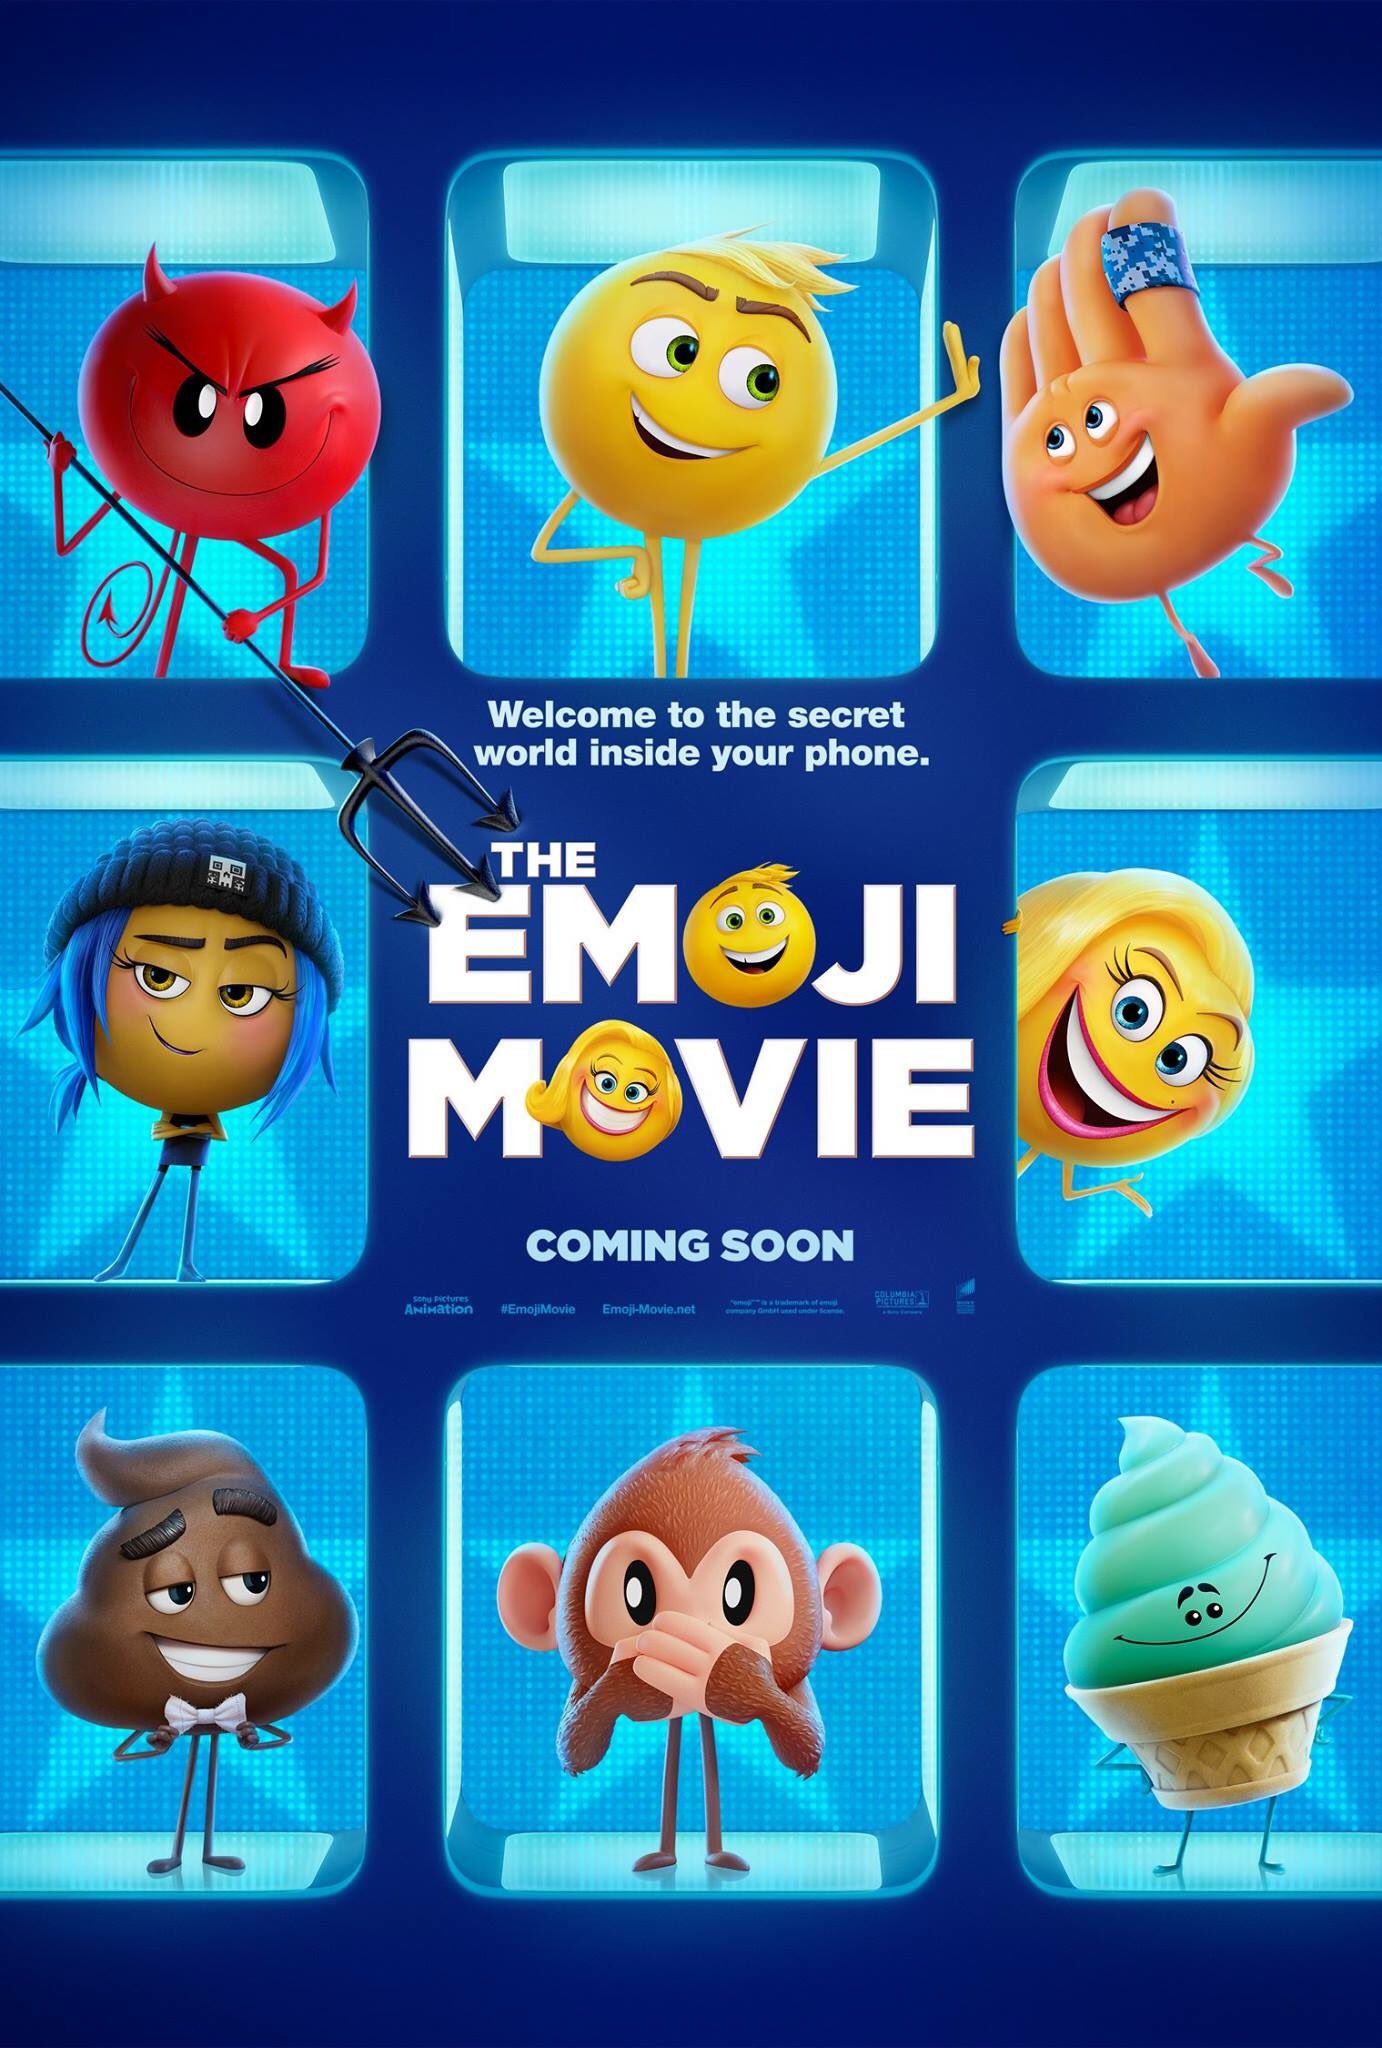 Mega Sized Movie Poster Image for The Emoji Movie (#10 of 14)